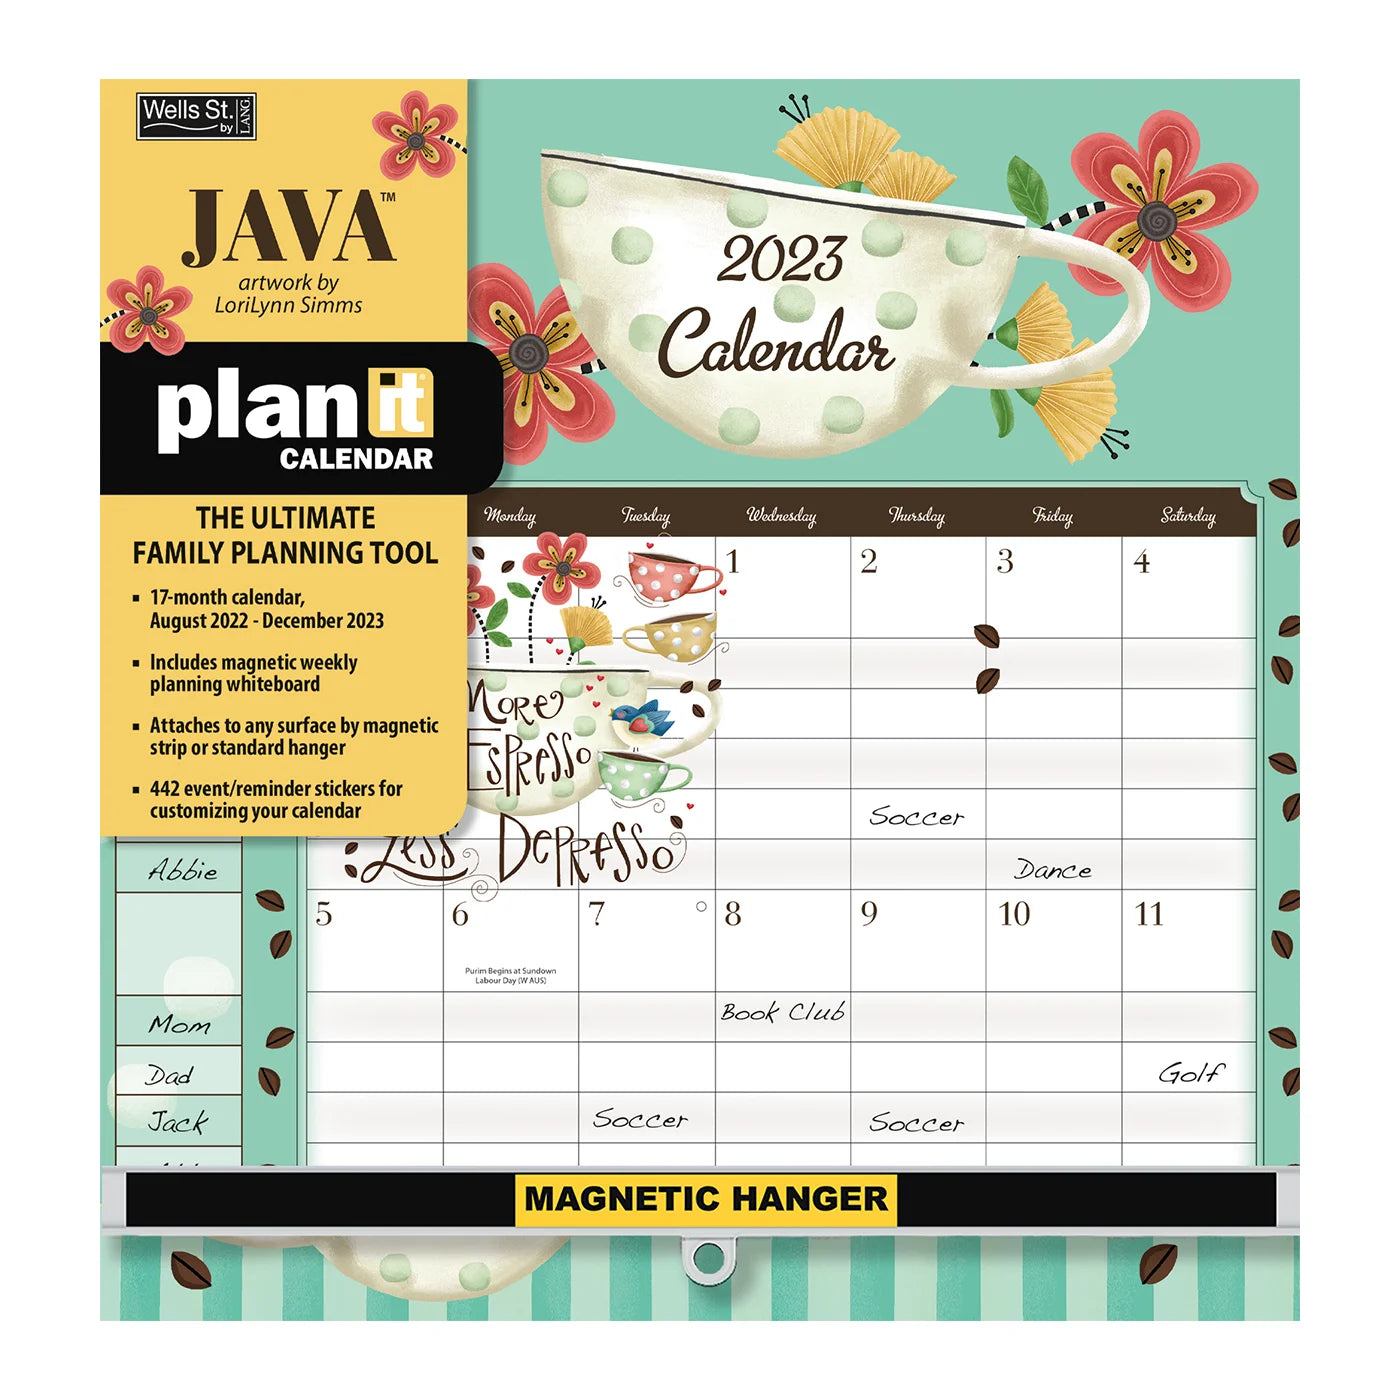 2023 LANG Java by LoriLynn Simms - Plan-it Magnetic Square Wall Calendar